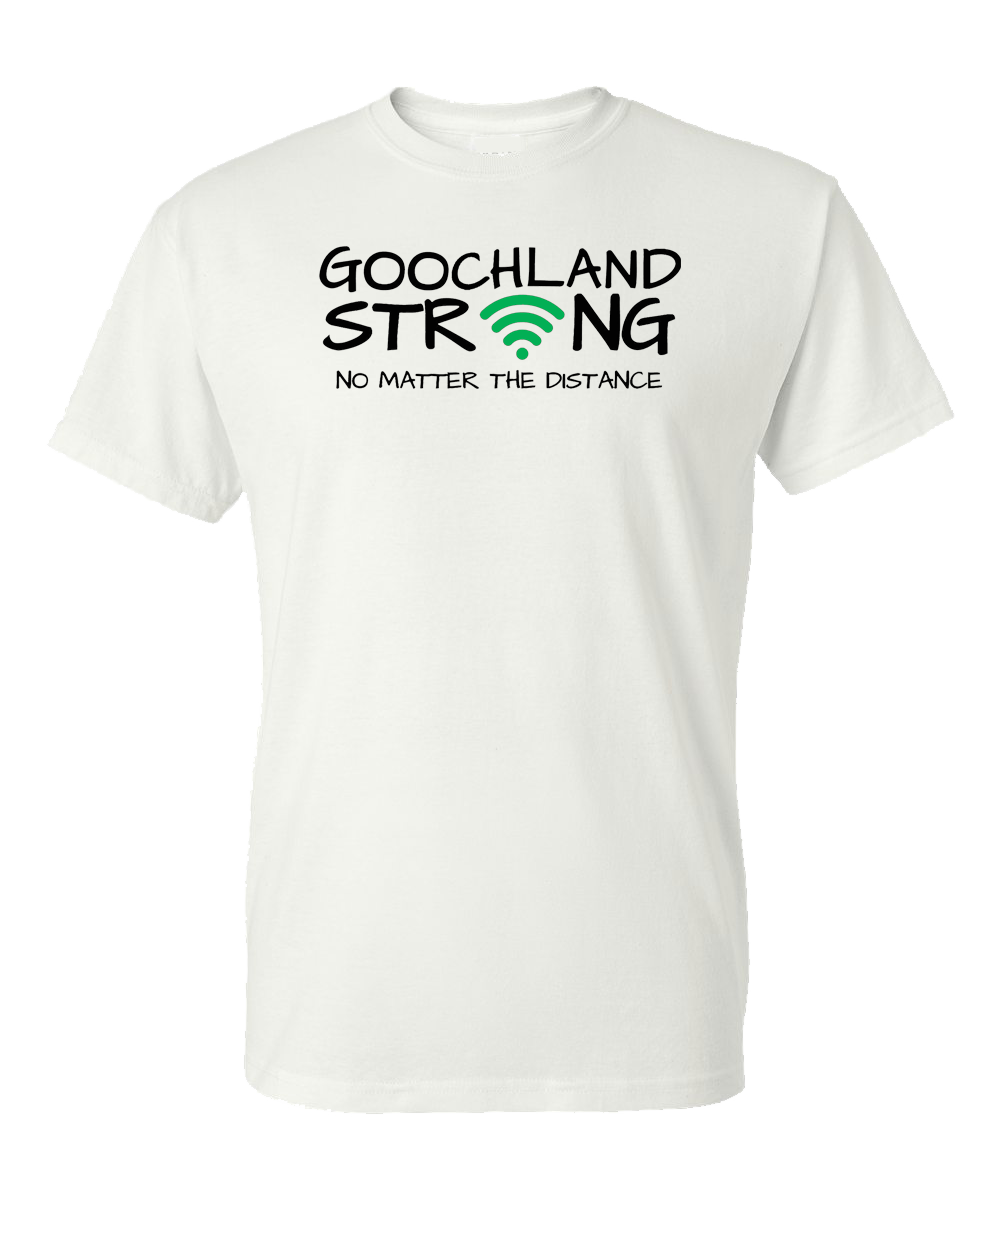 Goochland Strong - Randolph Elementary